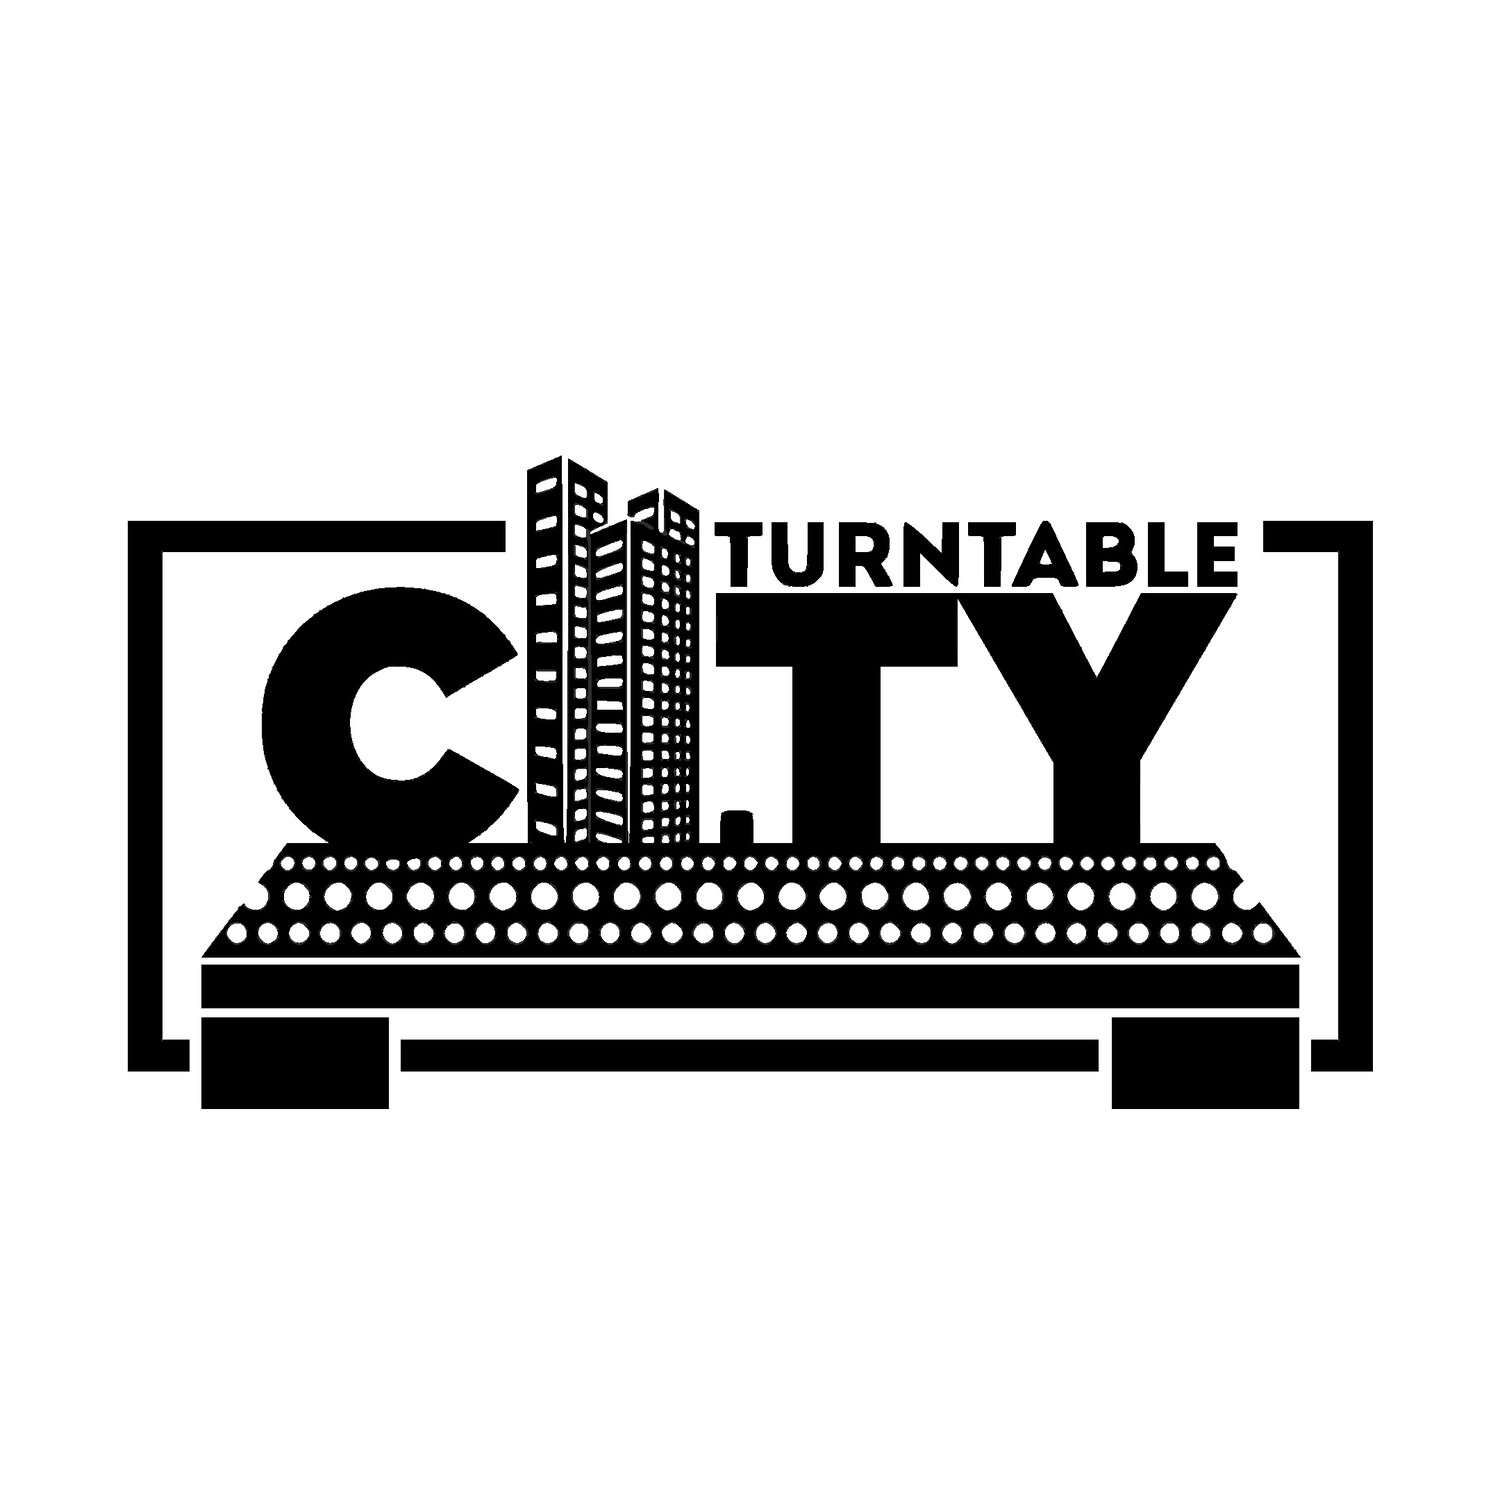 Turntable City